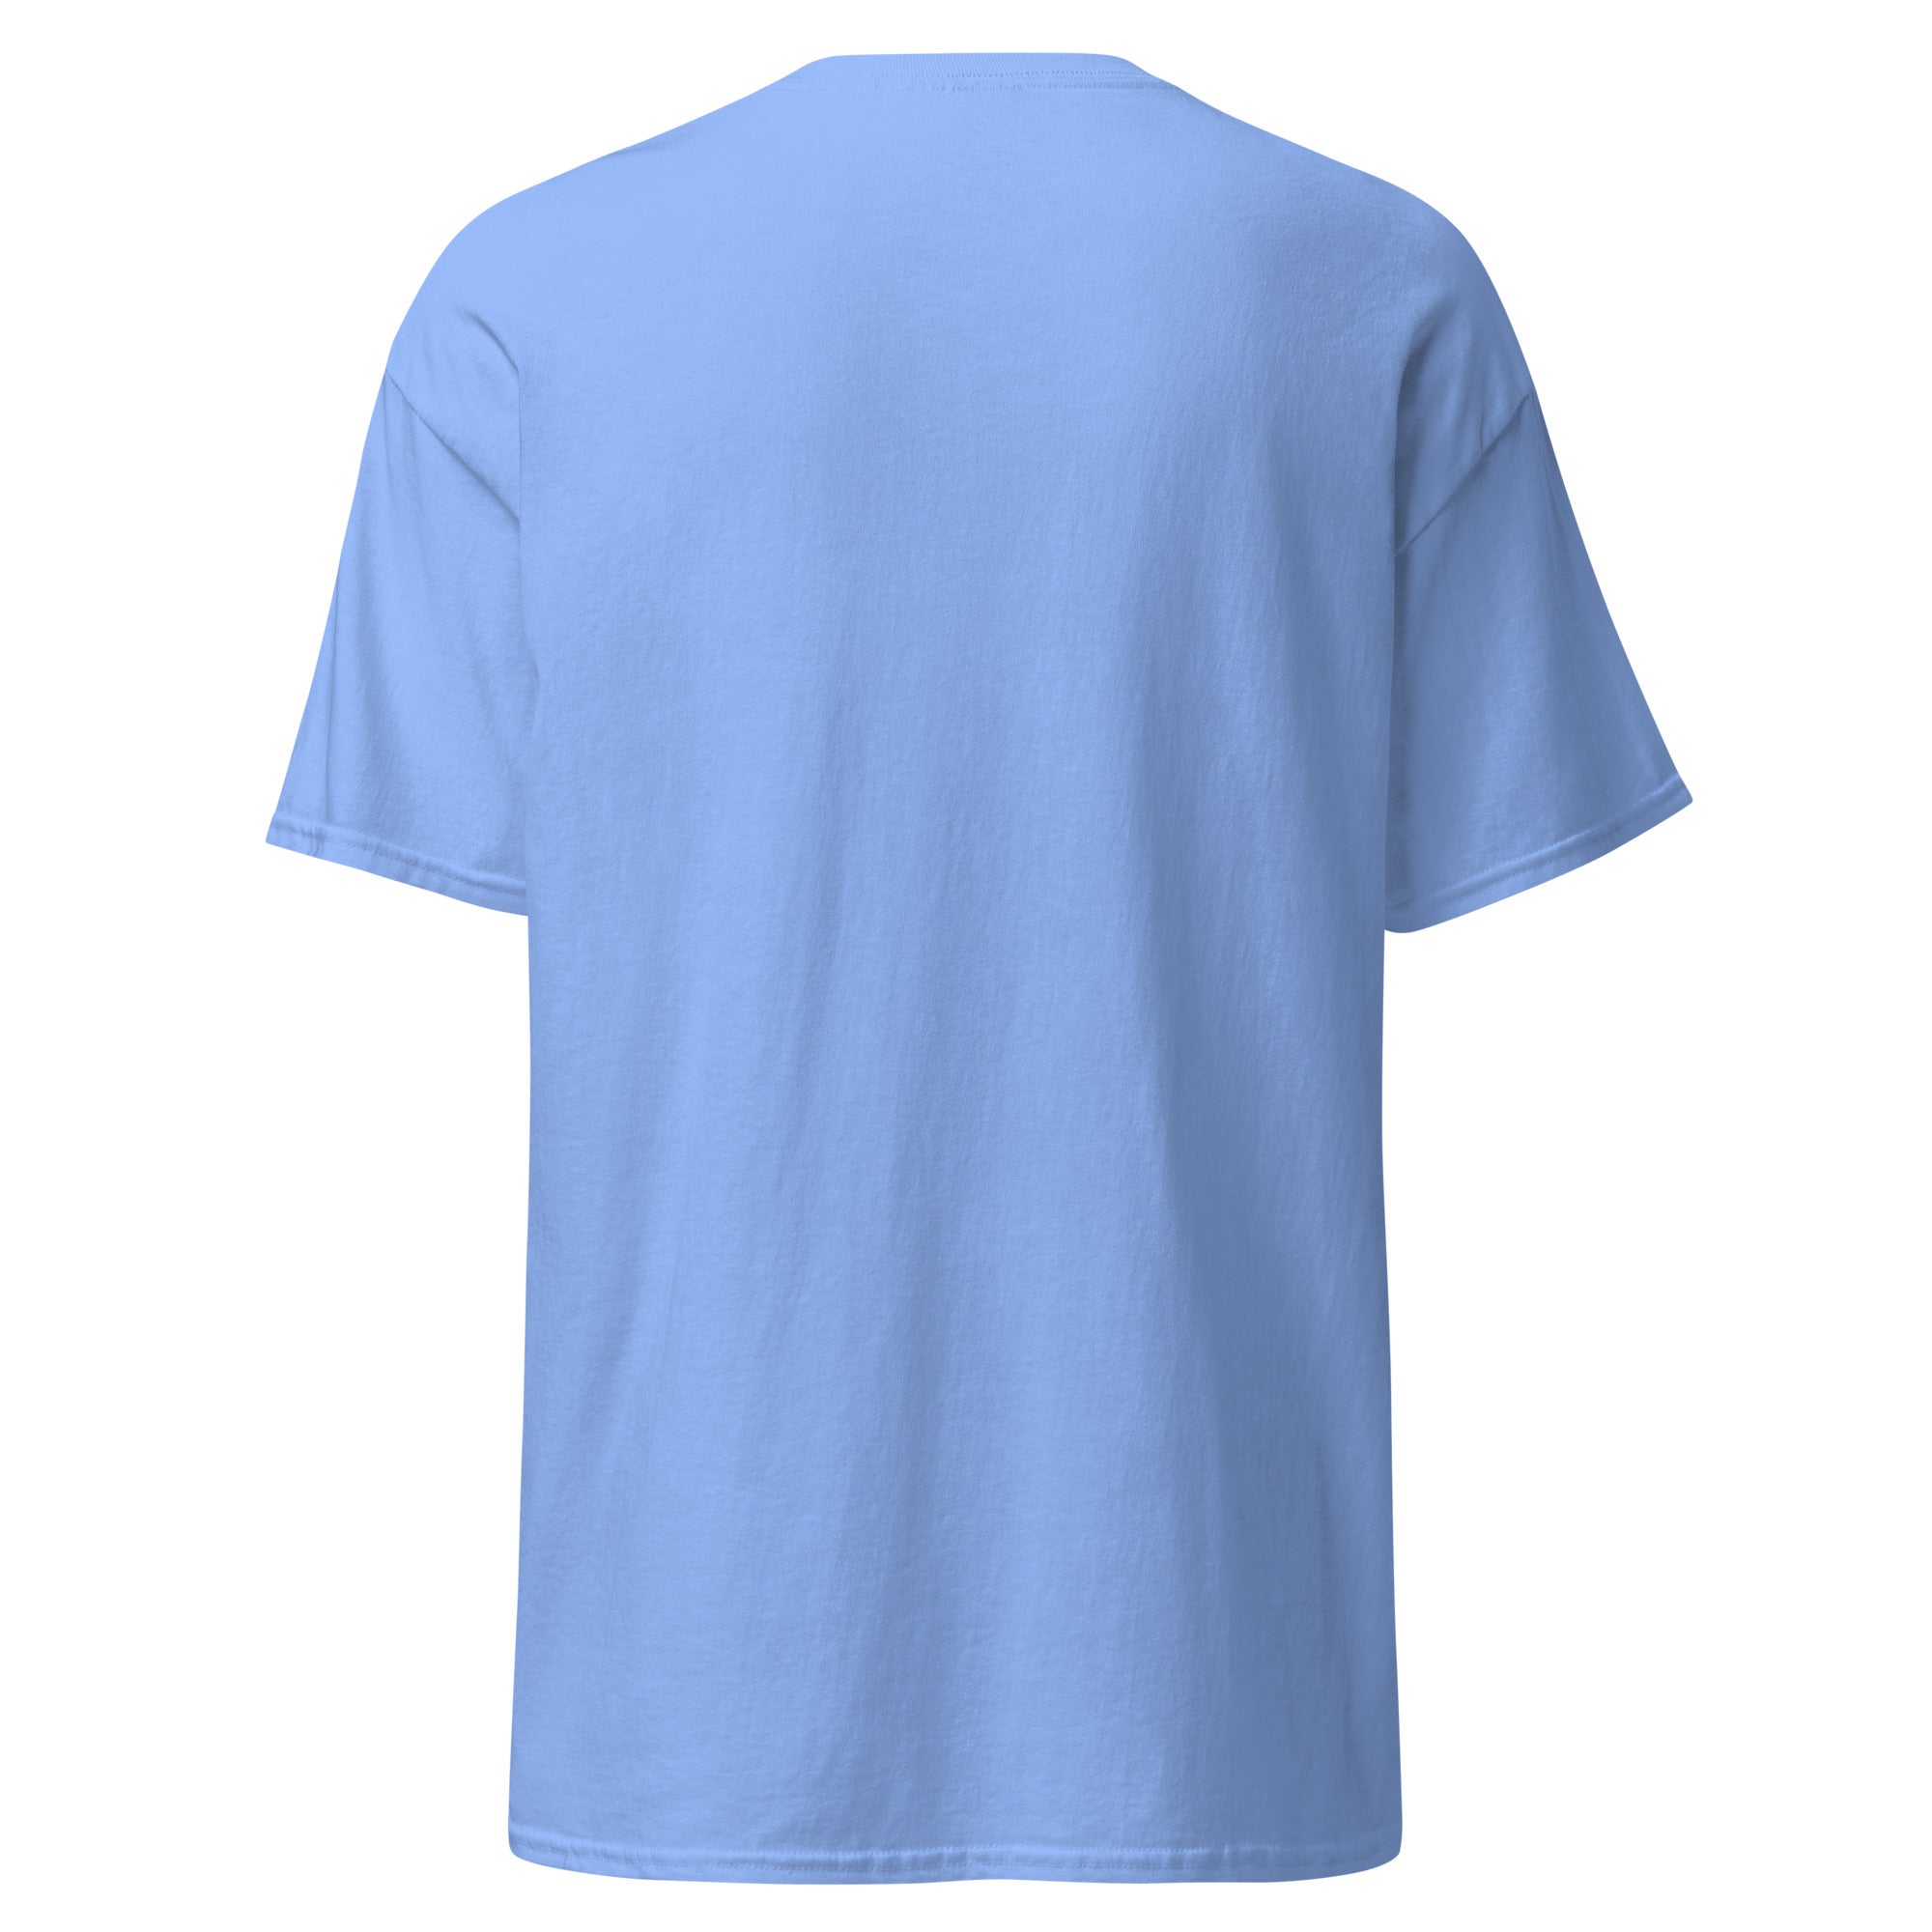 Autism Hand Print Mens Custom T Shirt